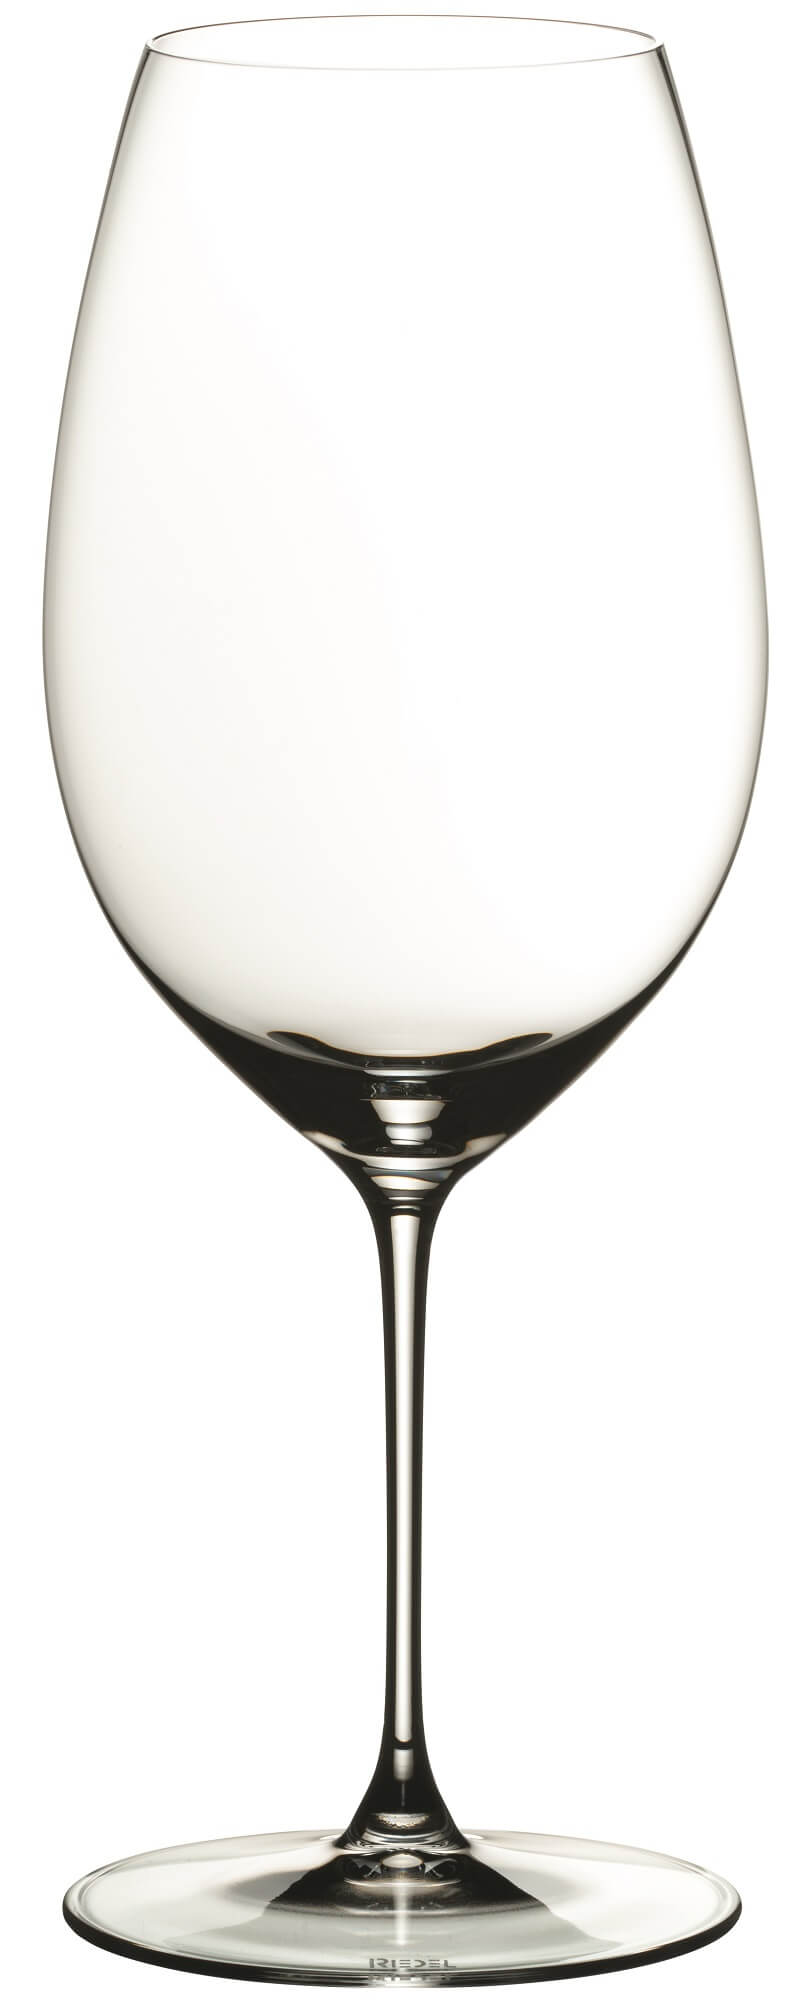 New World Shiraz glass Veritas, Riedel - 650ml (2 pcs.)